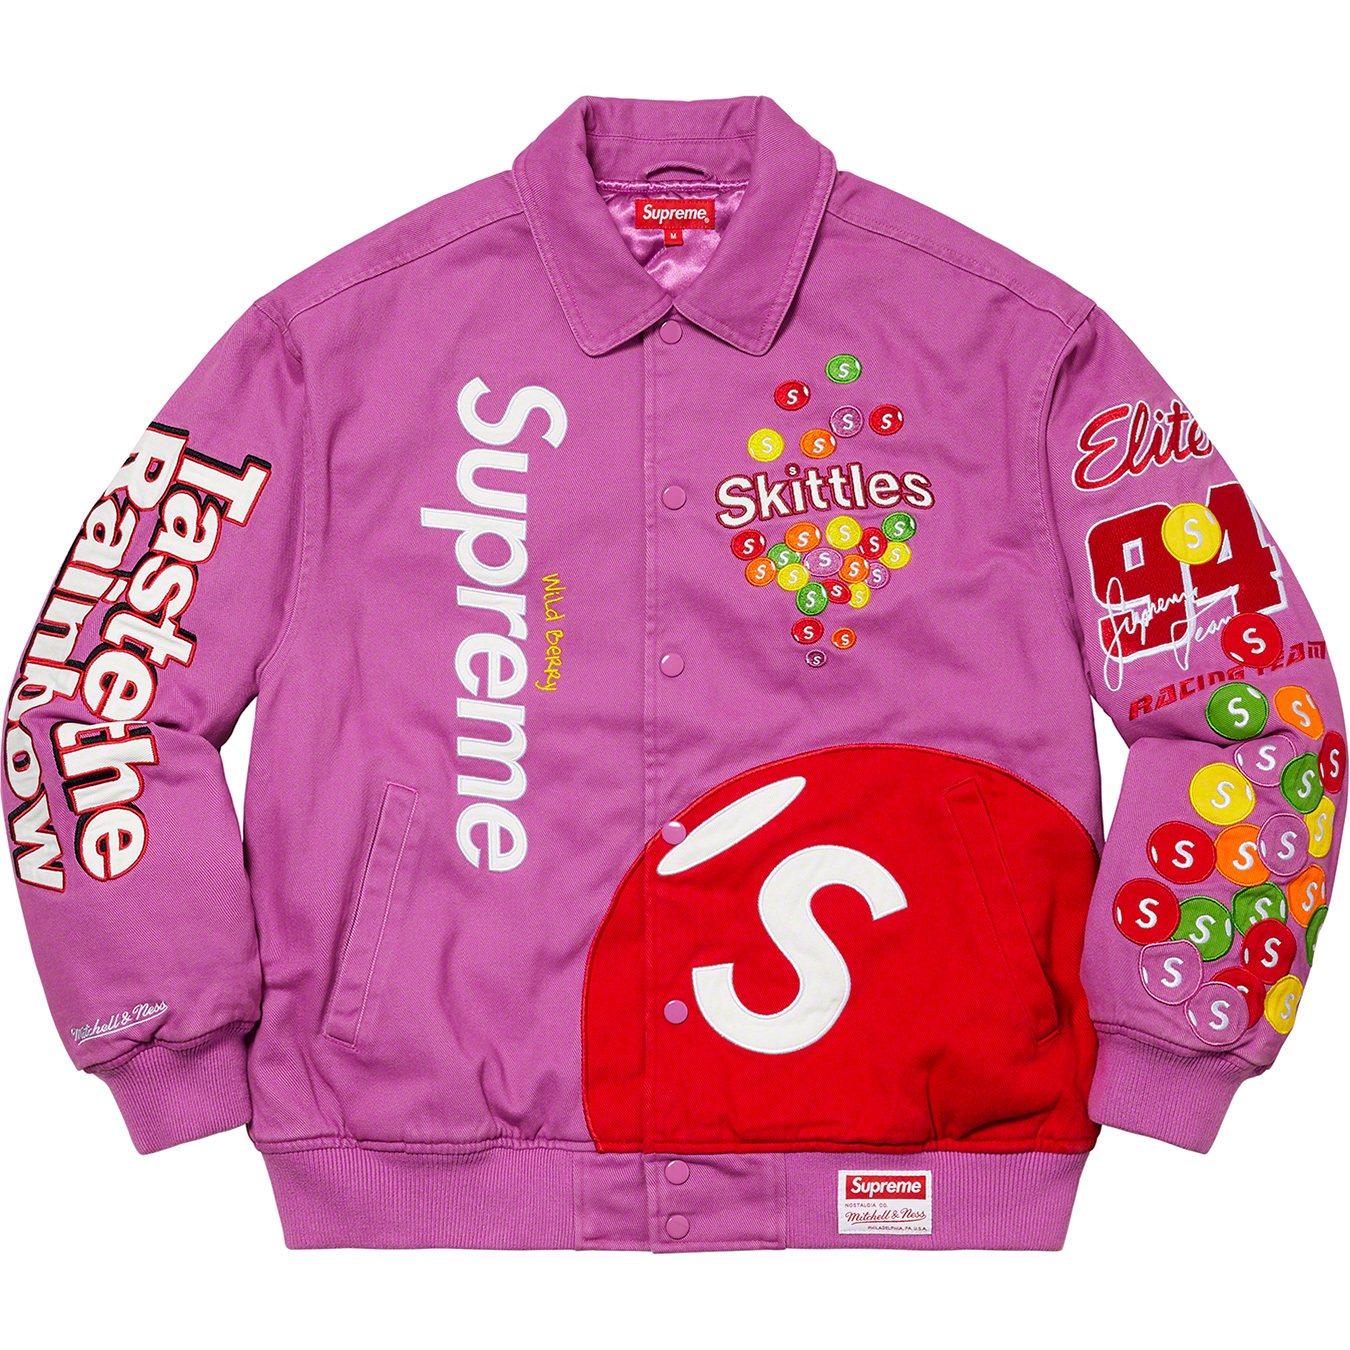 Skittles <wbr>Mitchell & Ness Varsity Jacket - fall winter 2021 